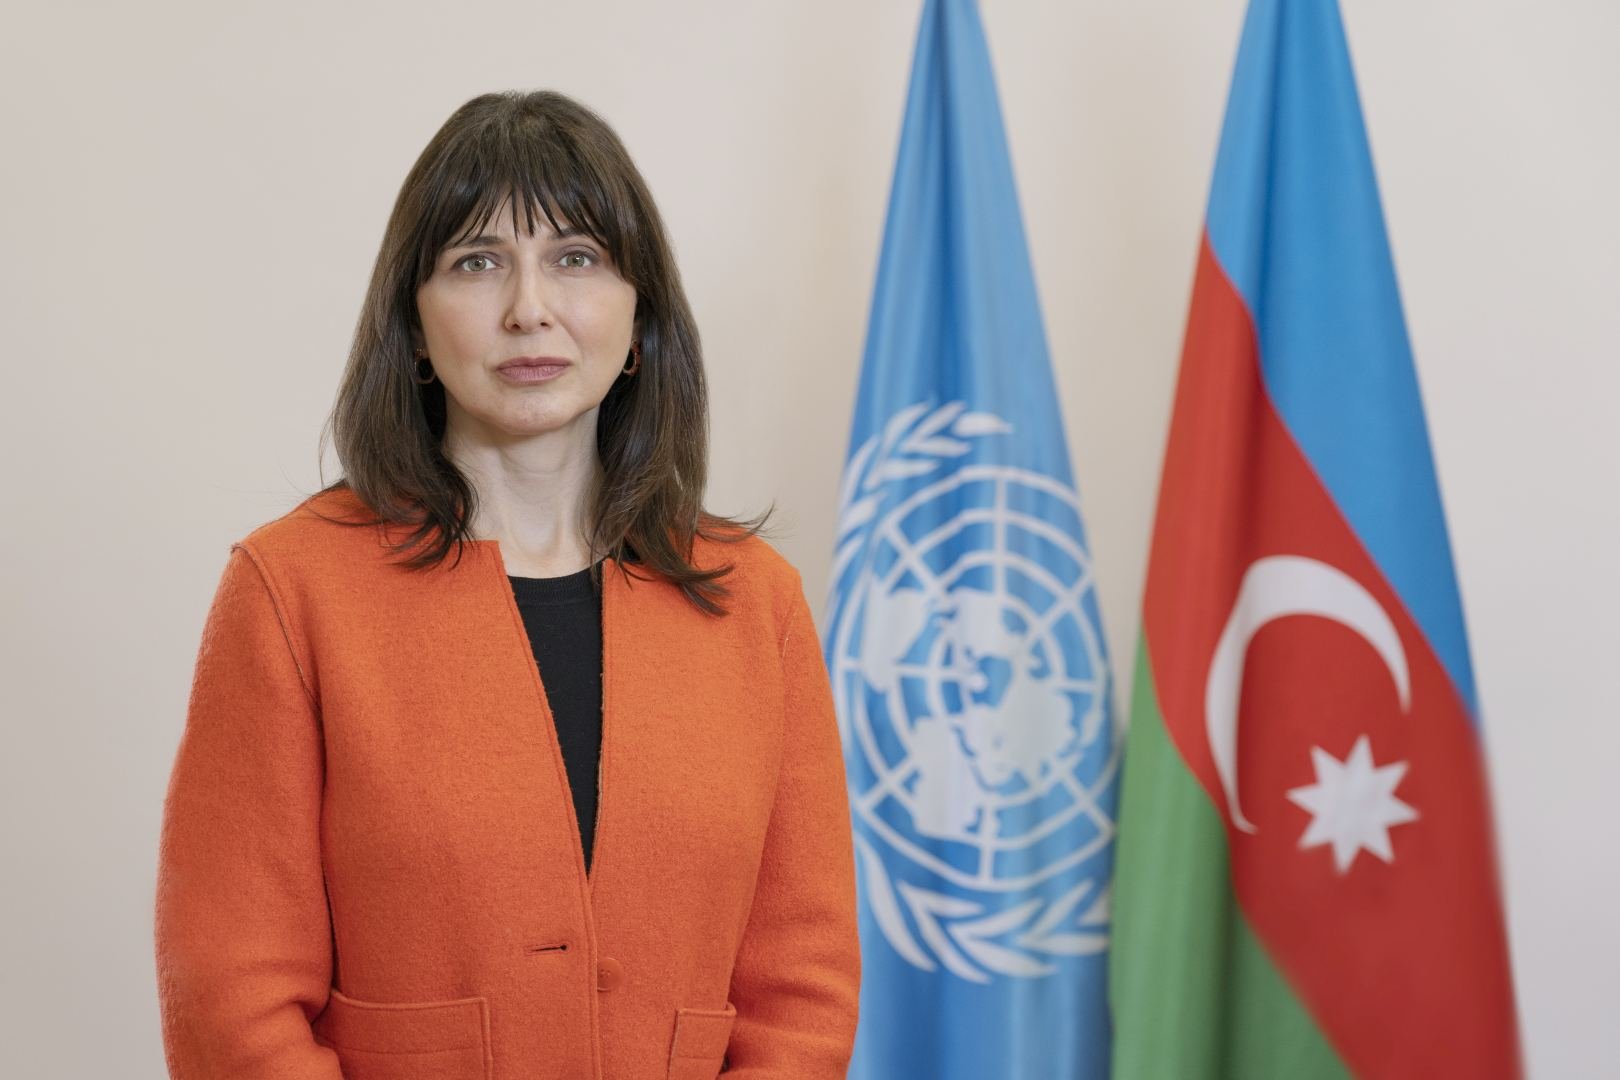 UN-Azerbaijan: Celebrating 30 years of partnership